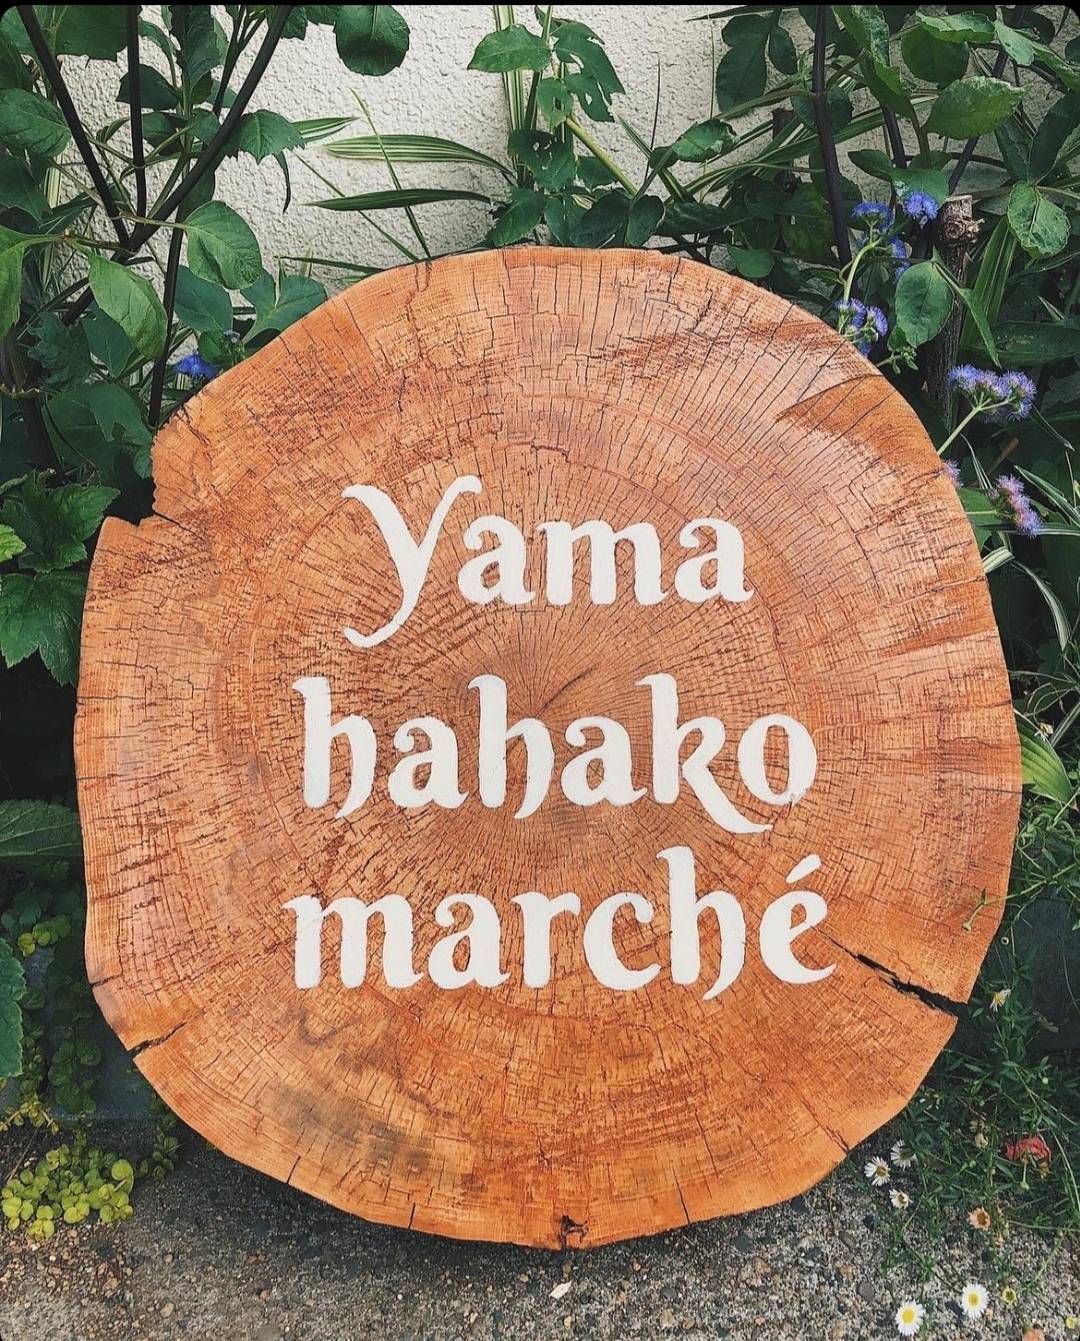 Yamahahako march’e